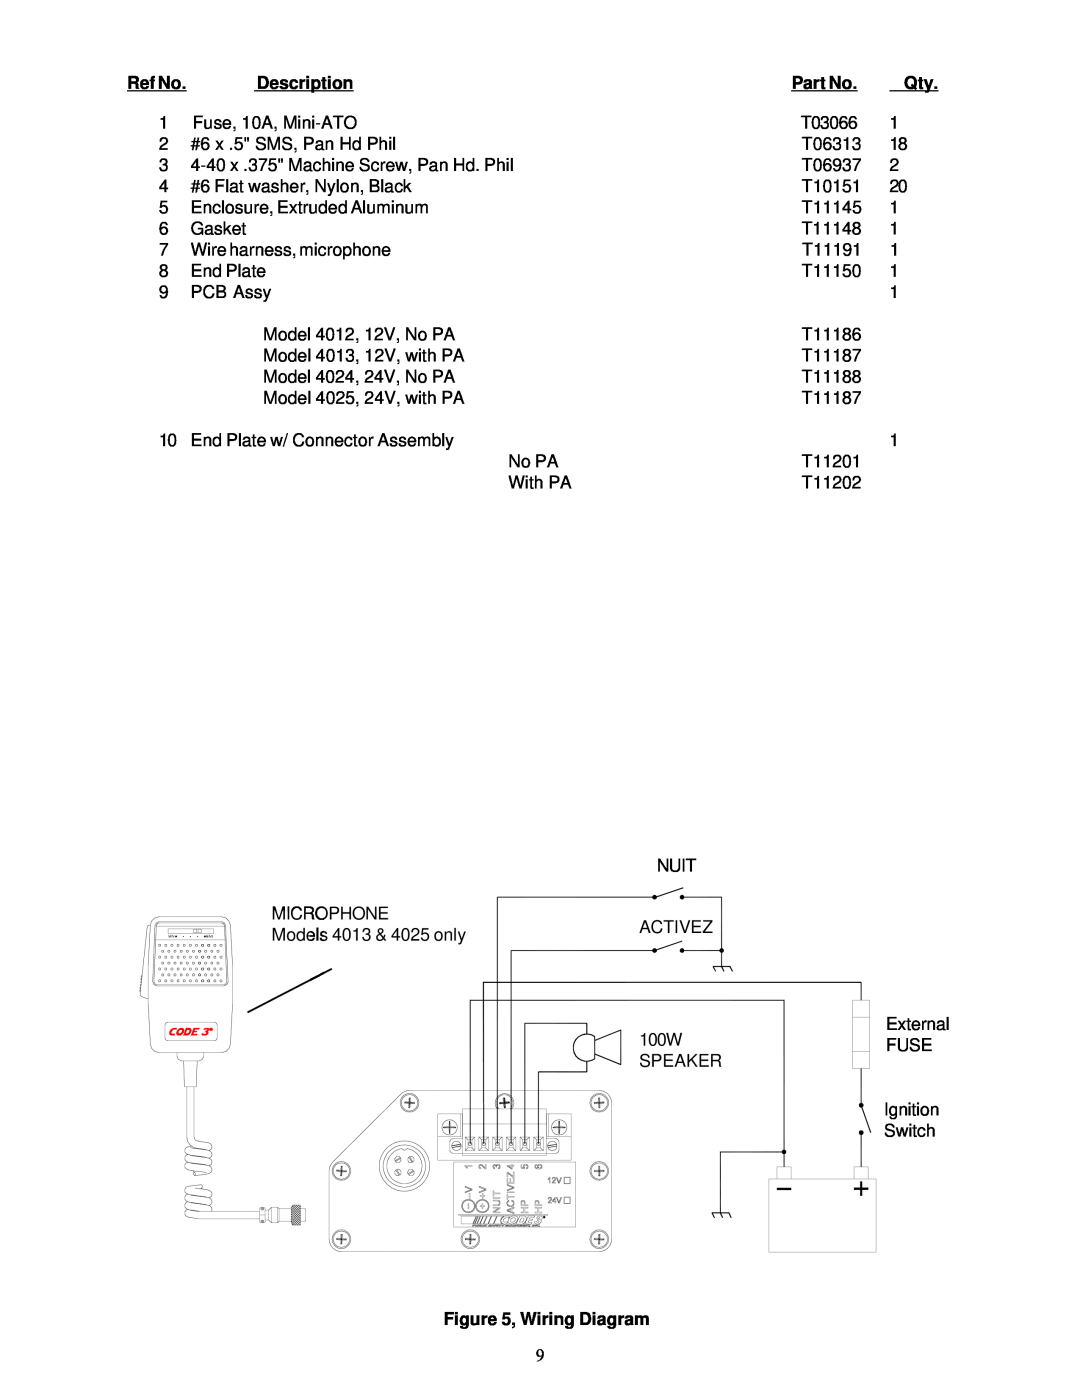 Bosch Appliances 4000 operation manual Ref No, Description, Wiring Diagram 